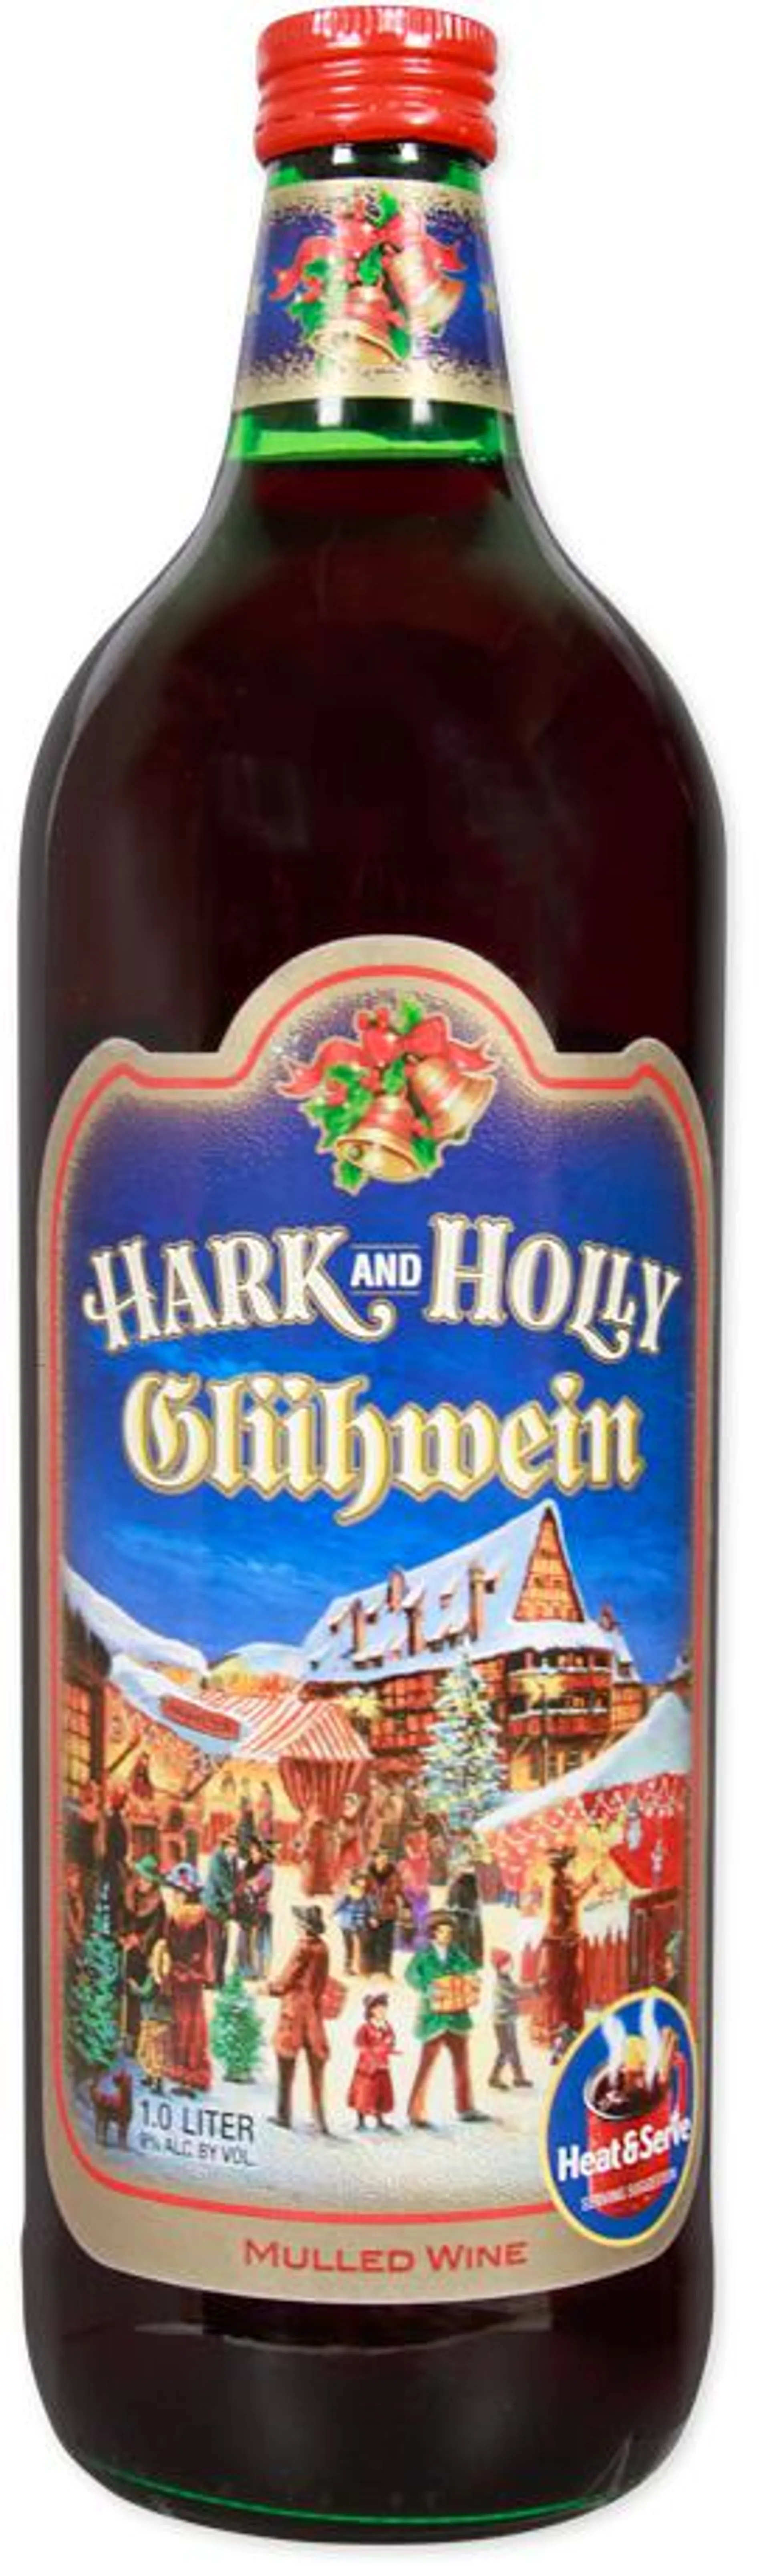 Hark and Holly Glühwein Mulled Wine